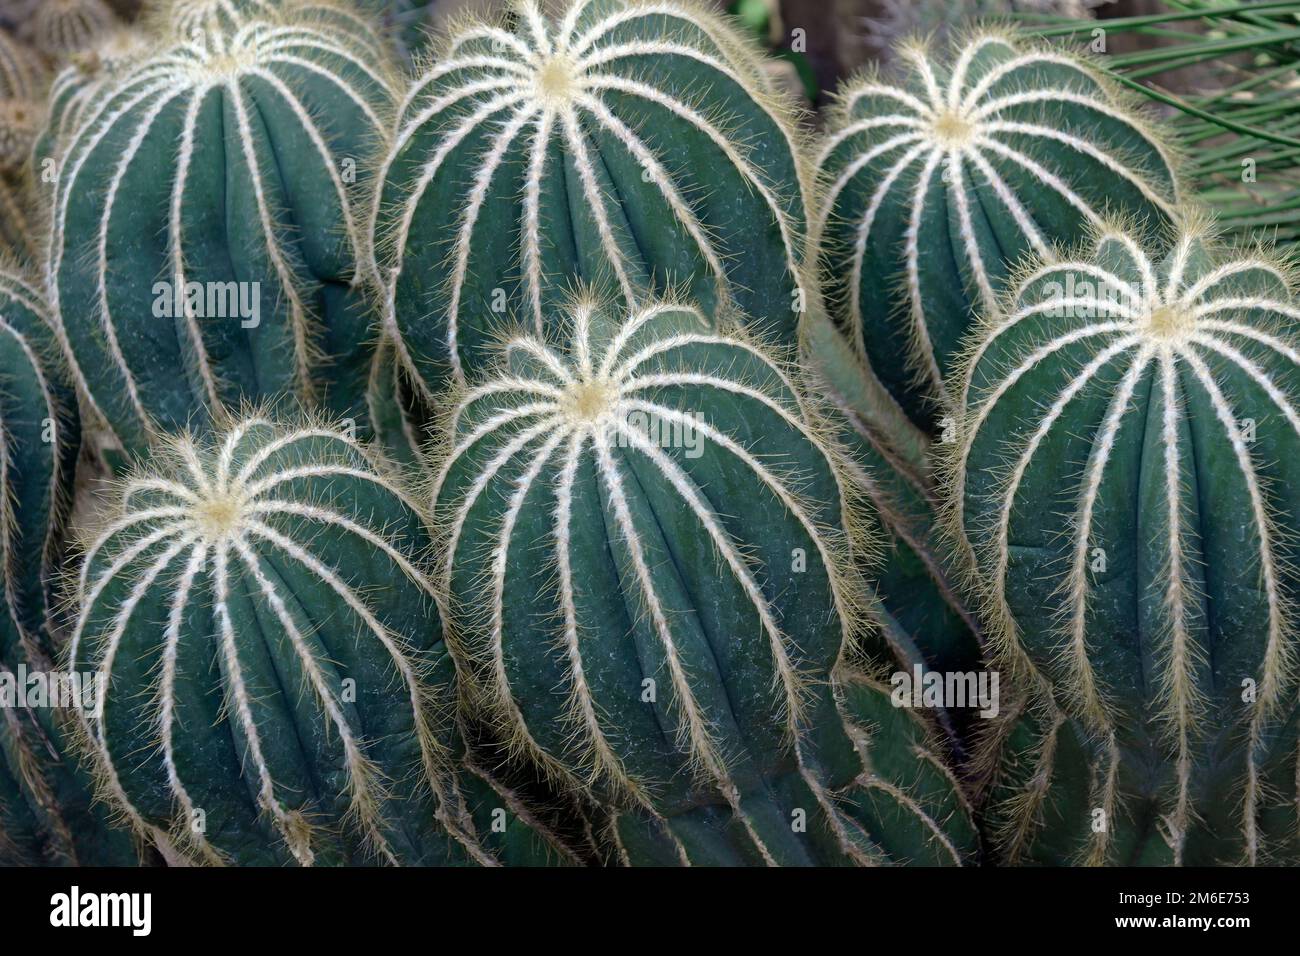 Close up image of Ball cactus (Parodia magnifica) Stock Photo